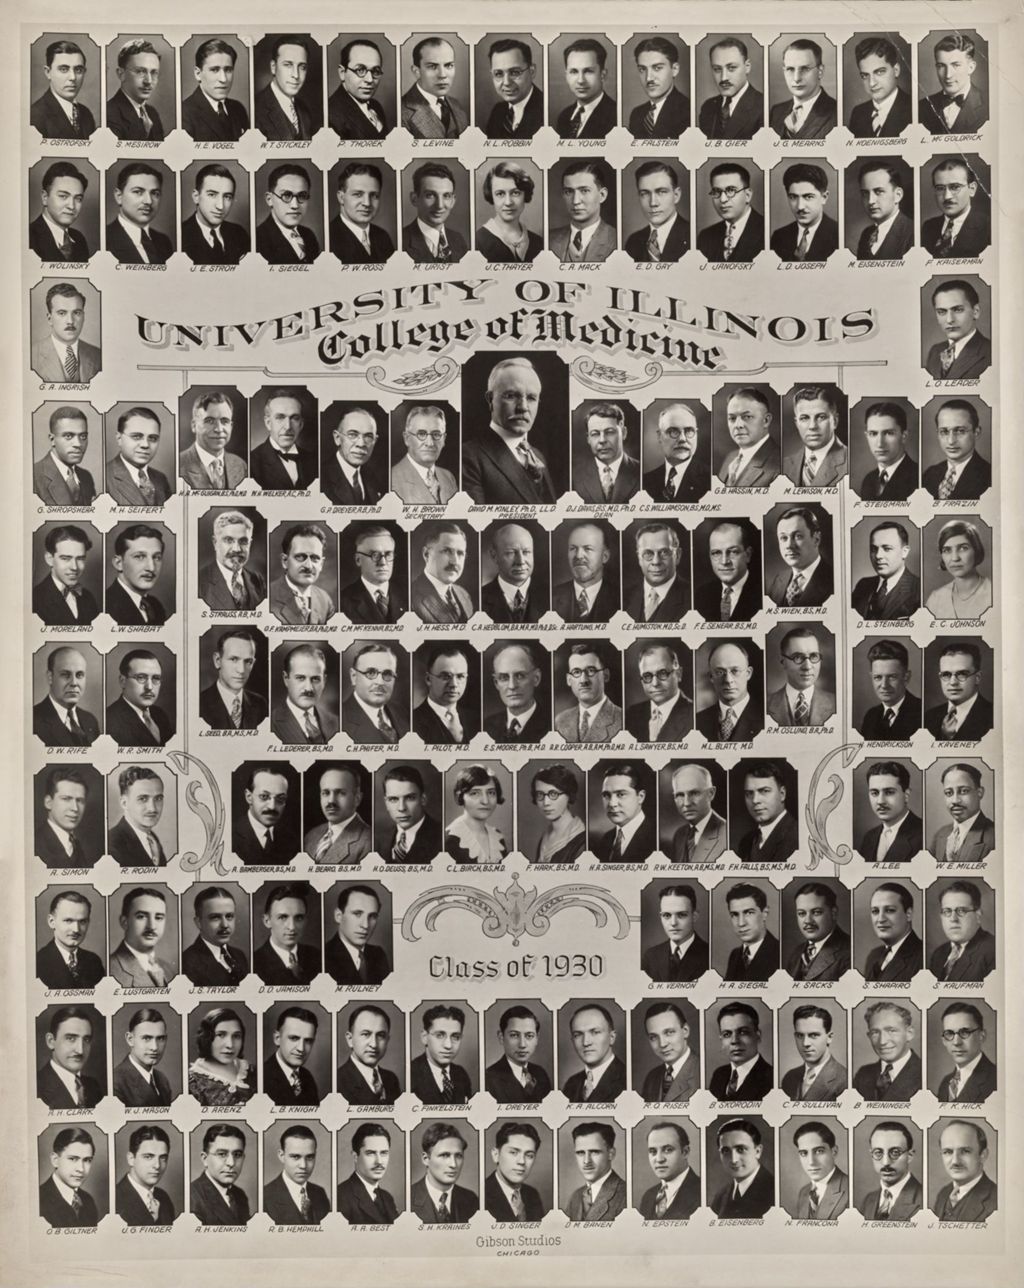 Miniature of 1930 graduating class, University of Illinois College of Medicine